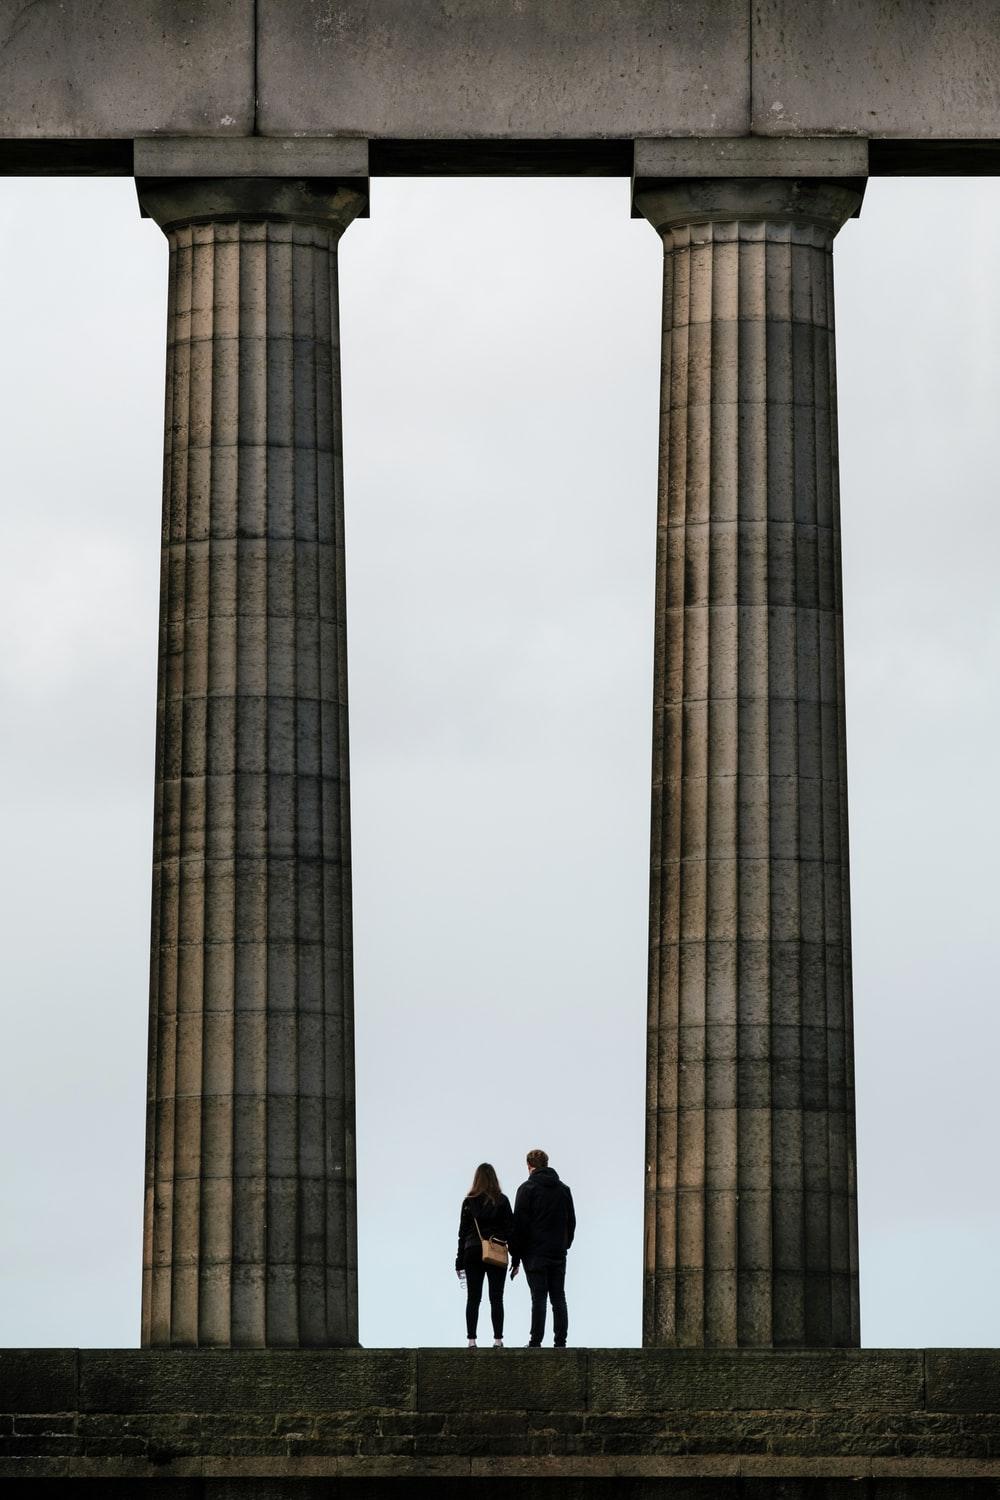 Pillars Picture. Download Free Image